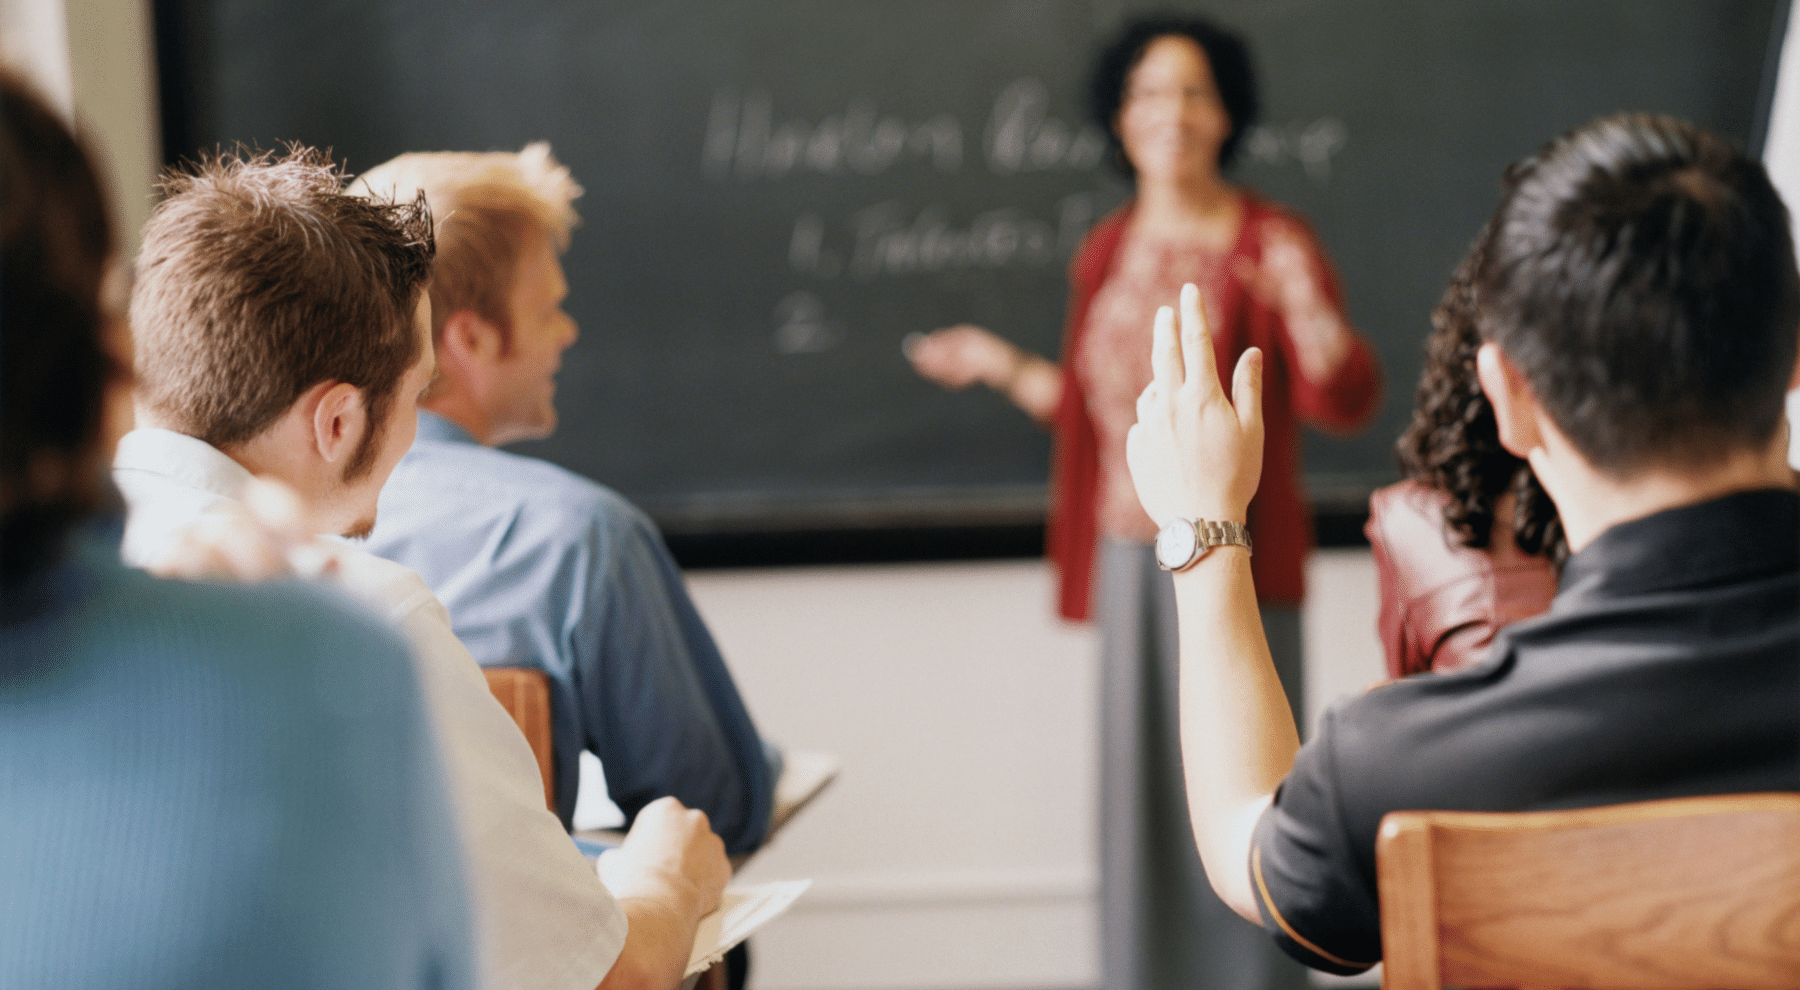 teacher at the chalkboard, student raising hand